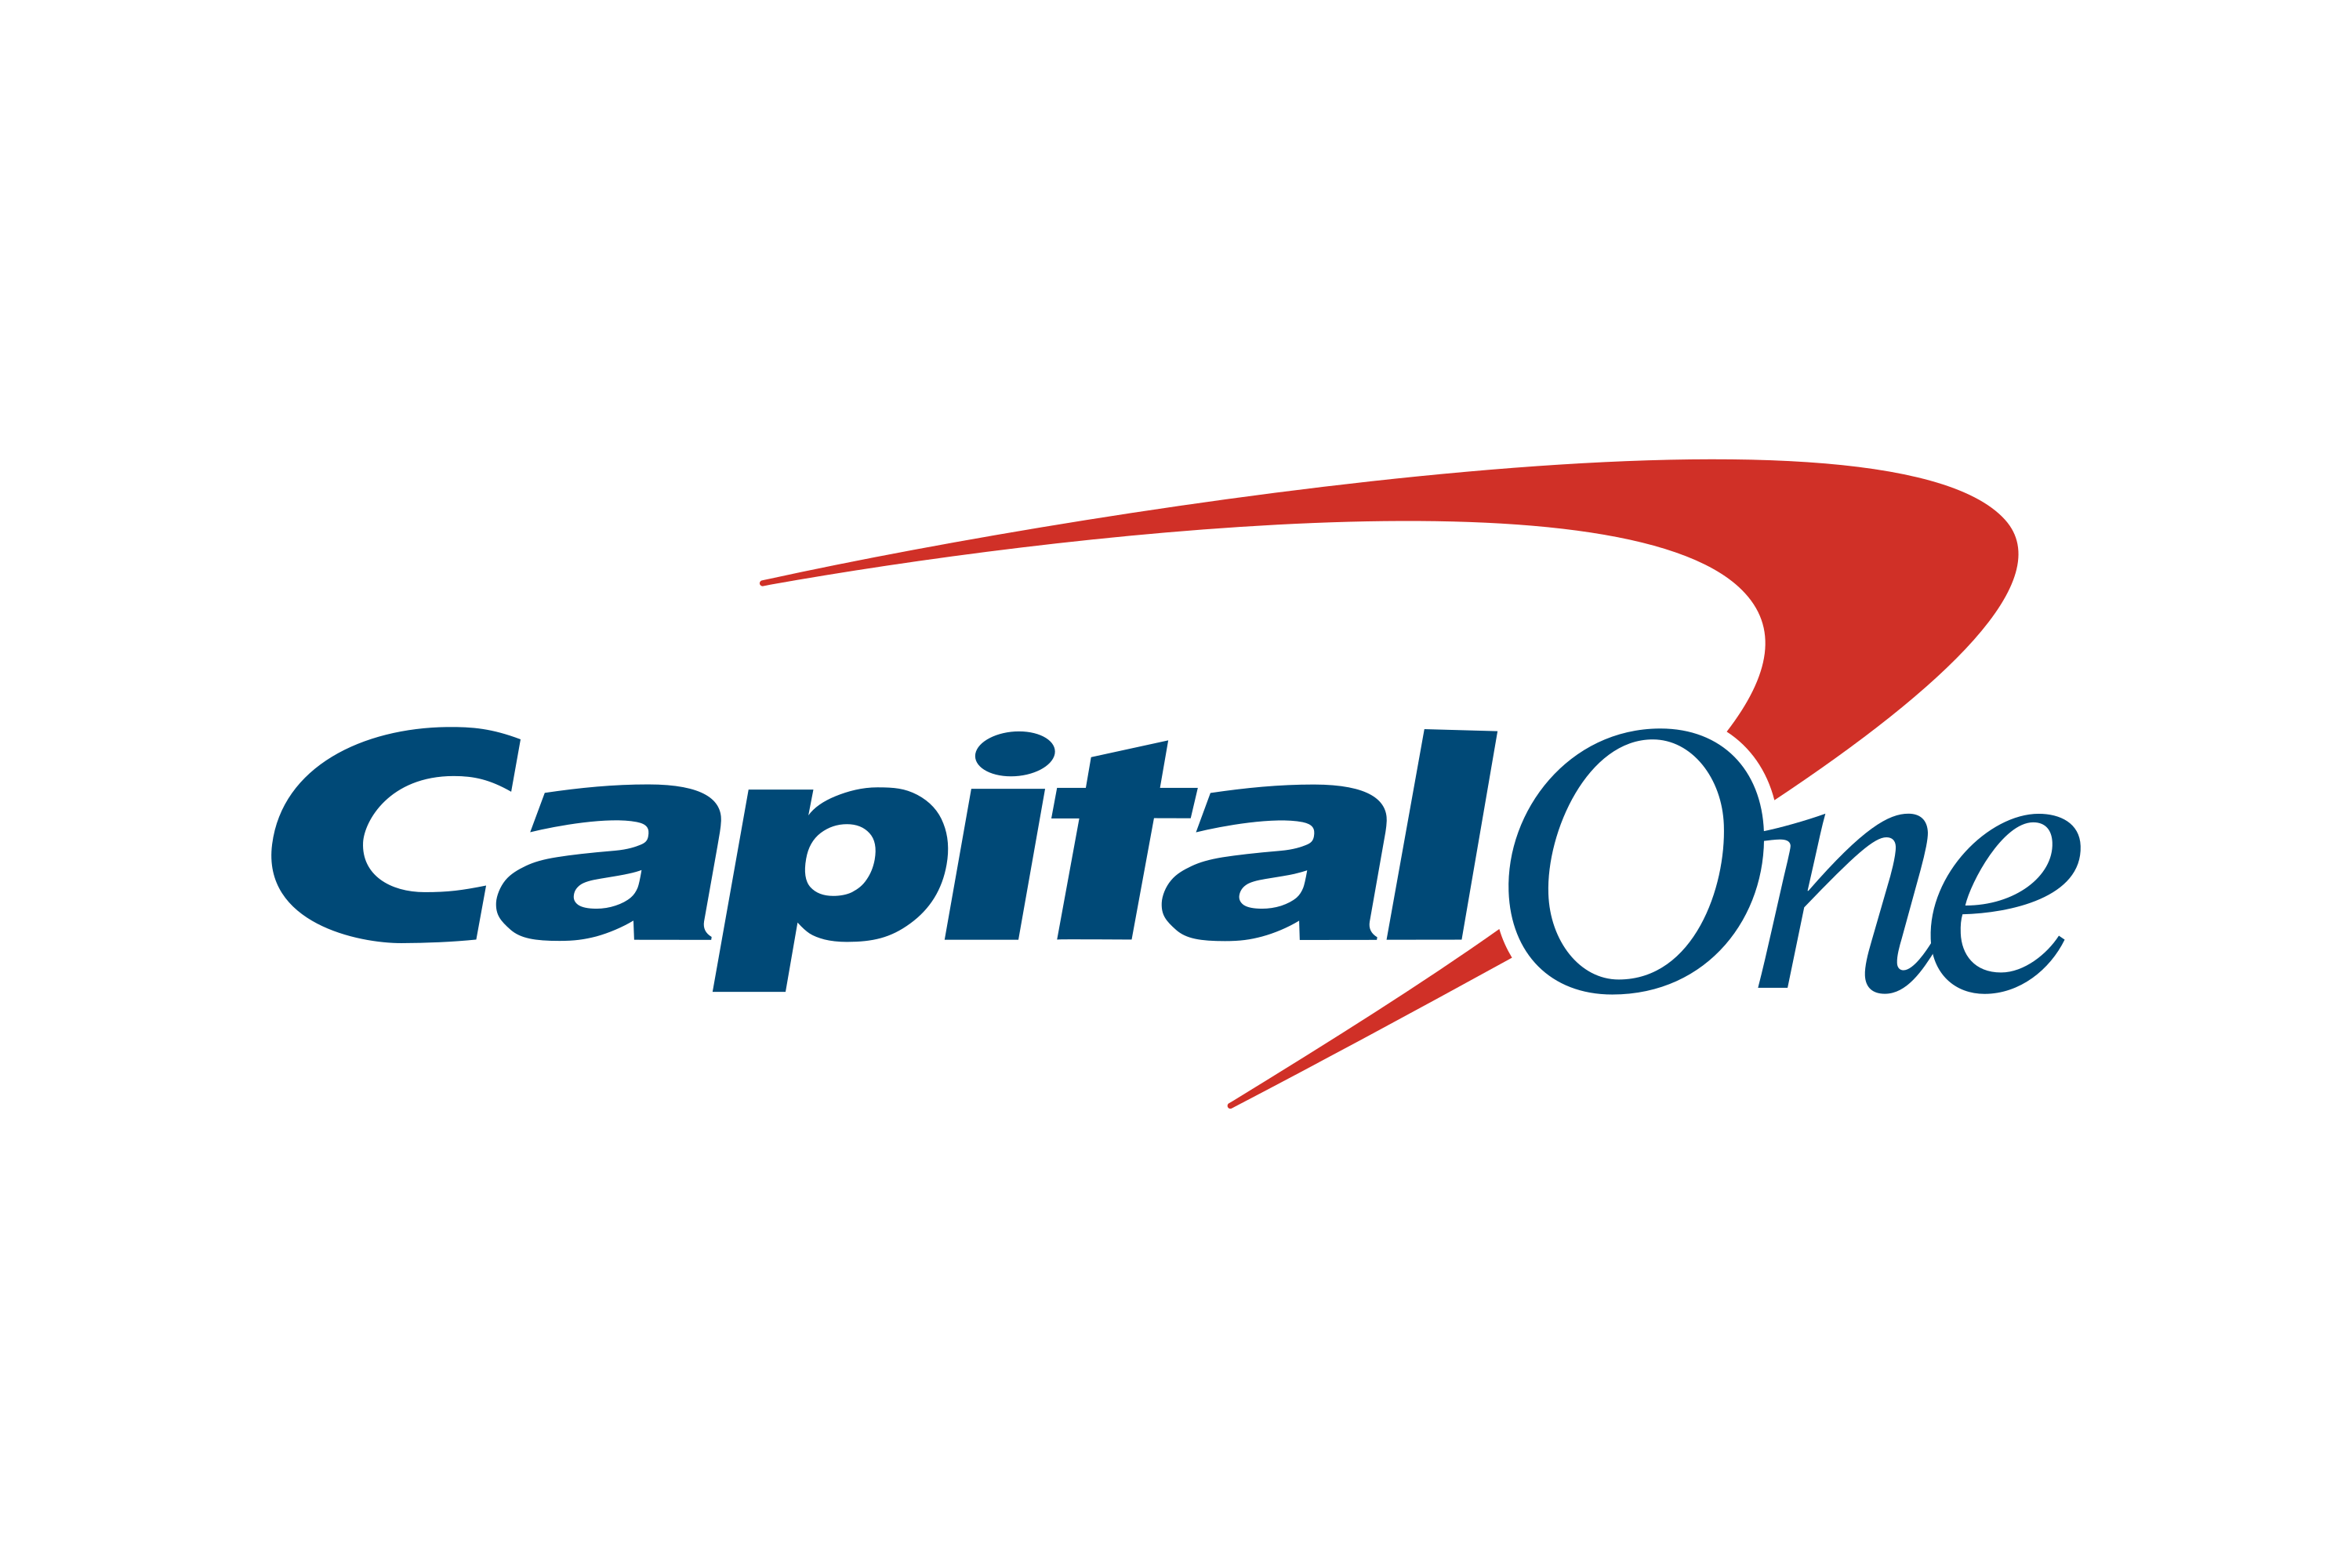 S one capital. Capital one. Capital one Arena. Kapital Bank Arena. Логотип extend Capital.